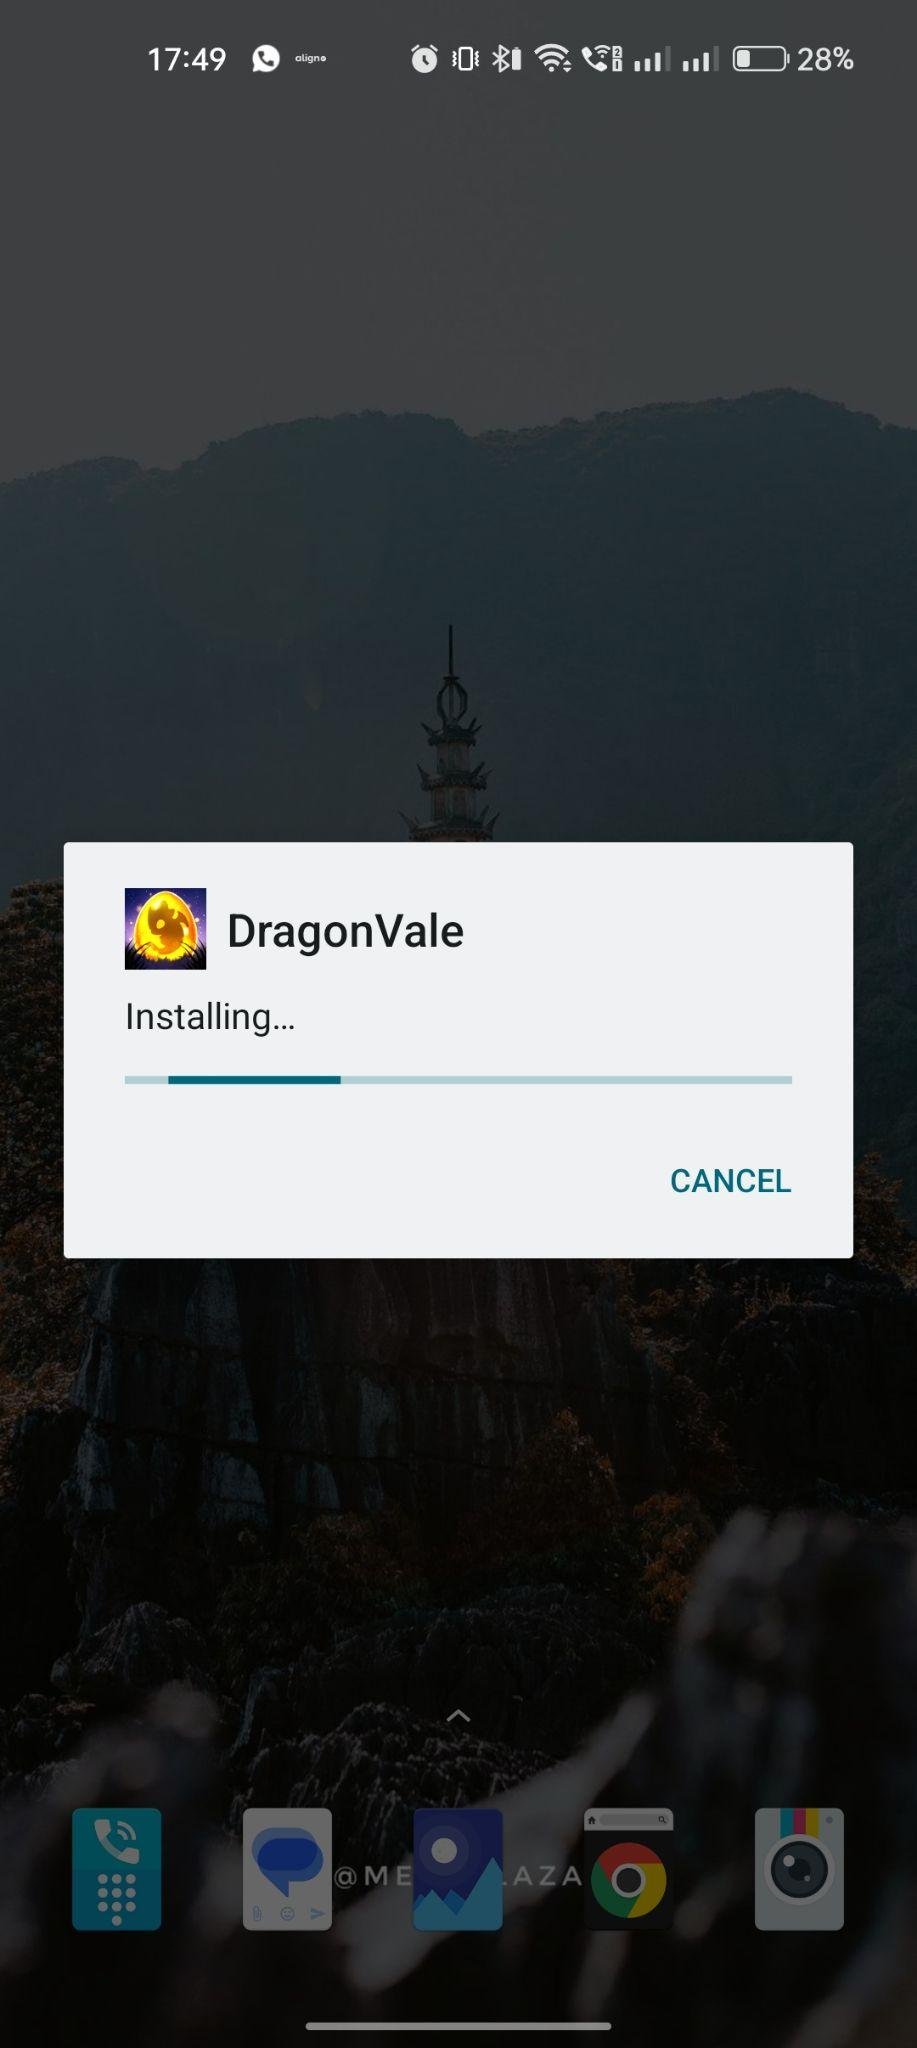 DragonVale apk installing